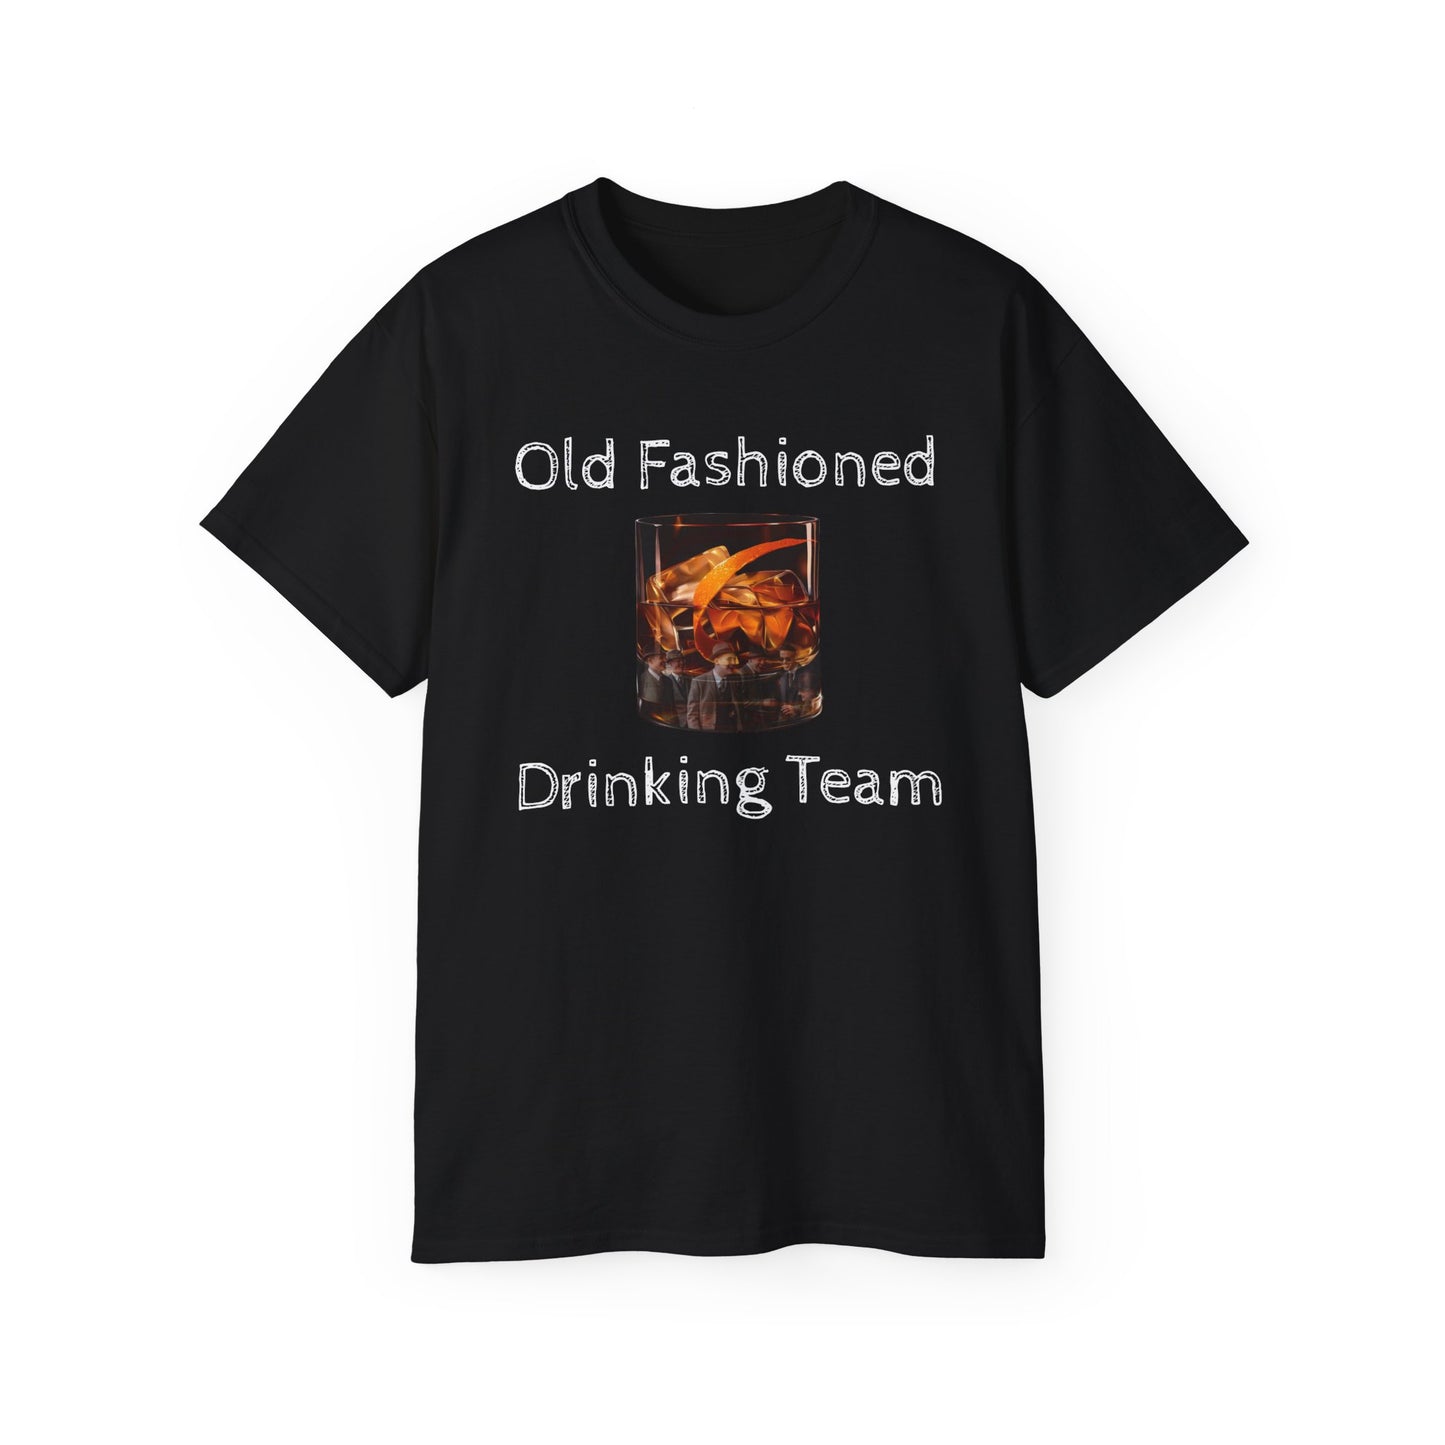 Old Fashioned T-shirt, bourbon Tshirt, Original Design, Whiskey Tee, Drinking Team, Call Me Old Fashioned